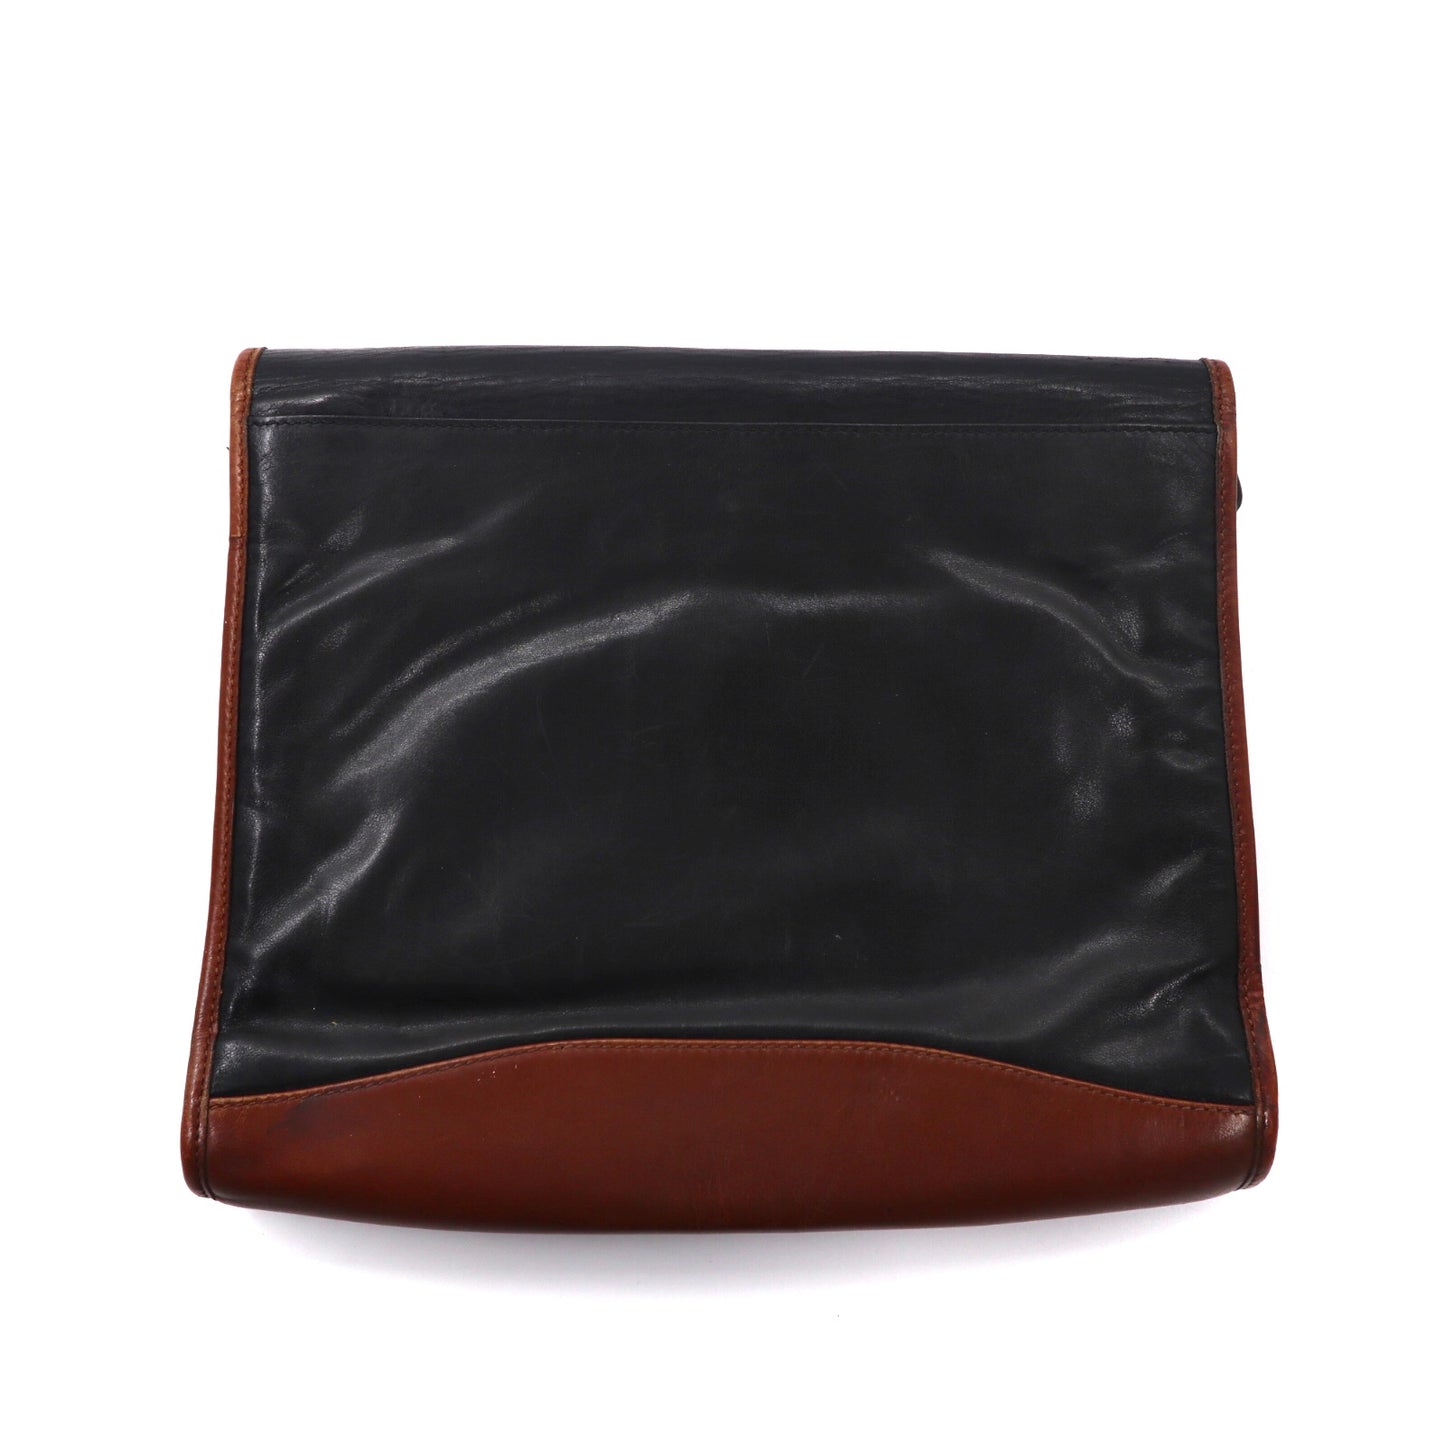 CELINE Bag Black Leather M08 Made in Italy – 日本然リトテ